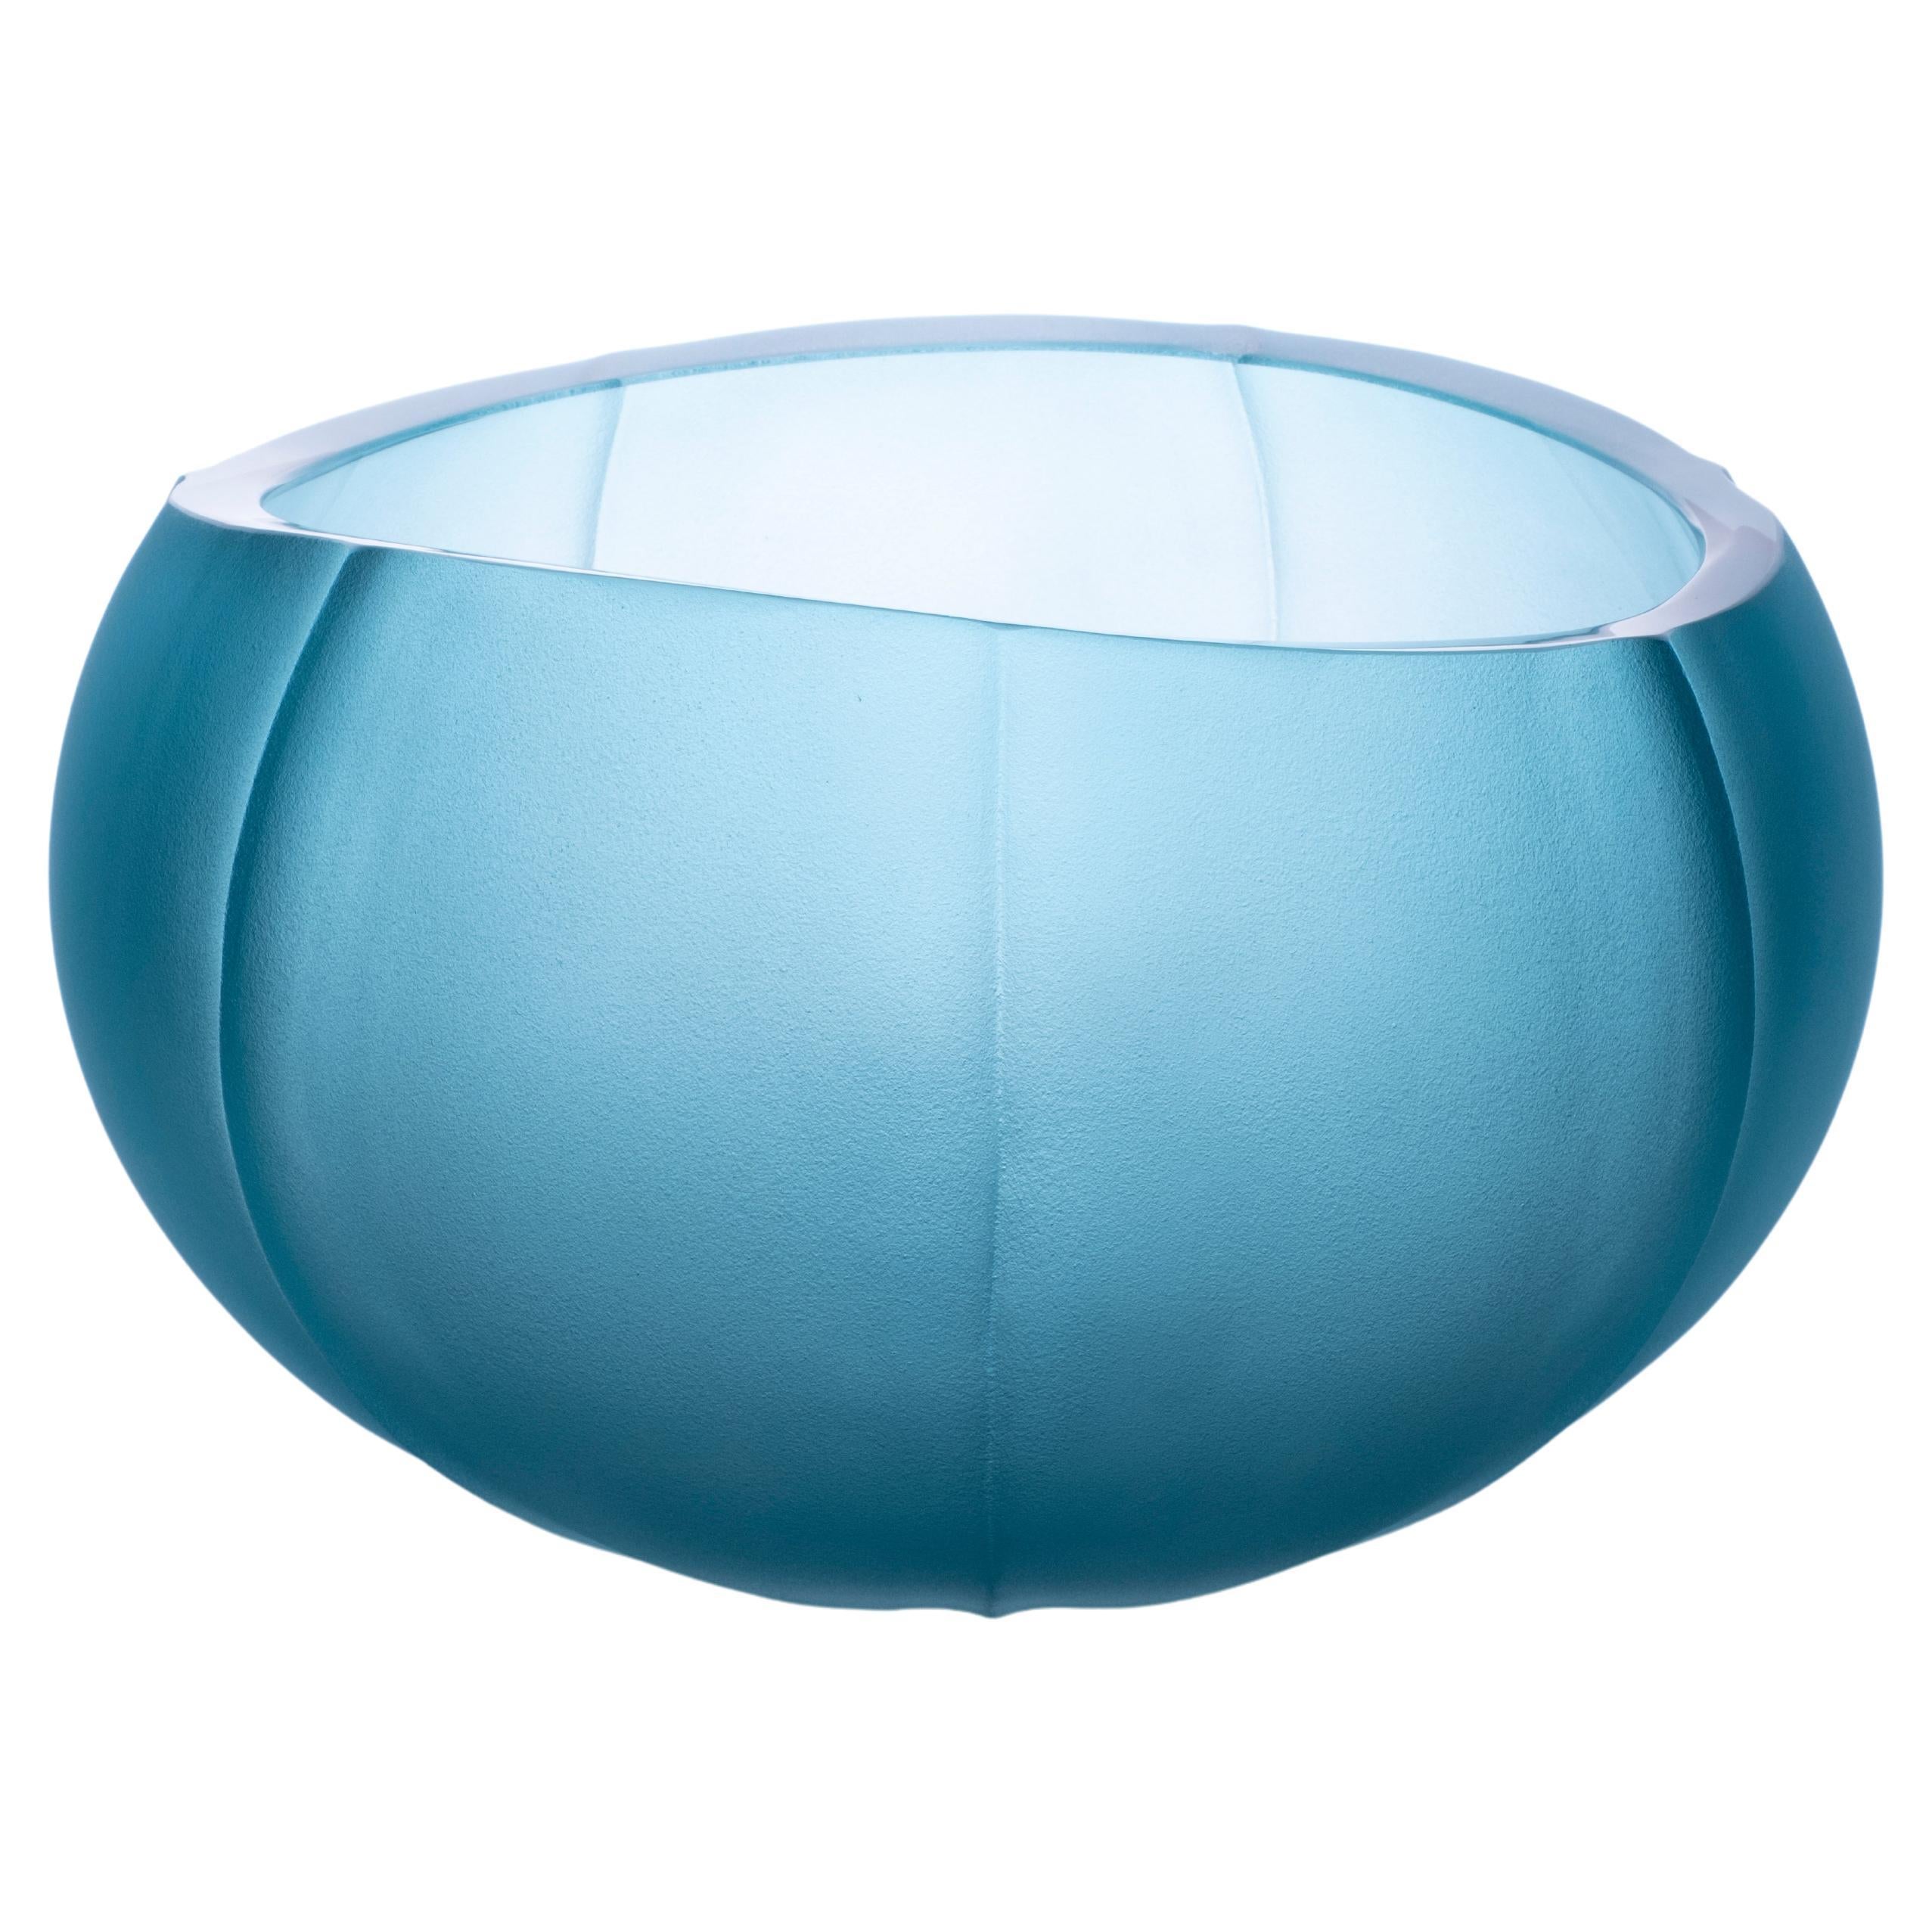 21st Century Federico Peri Linae Medium Vase Murano Glass Teal Blue